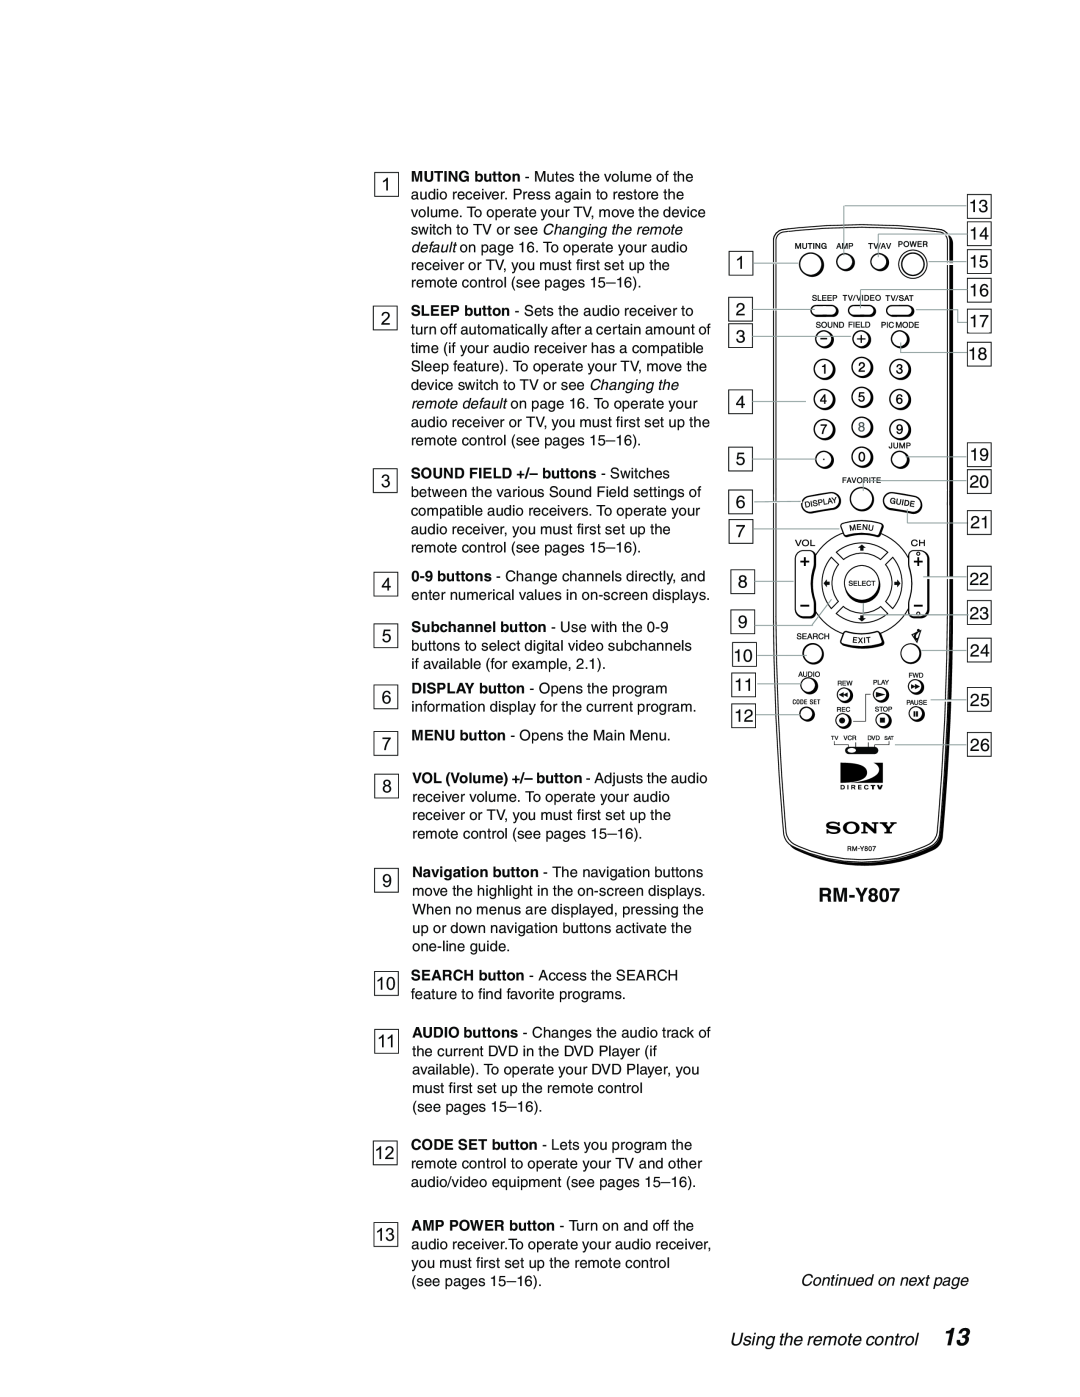 Sony SAT-B65, SAT-A65 manual RM-Y807, Using the remote control 